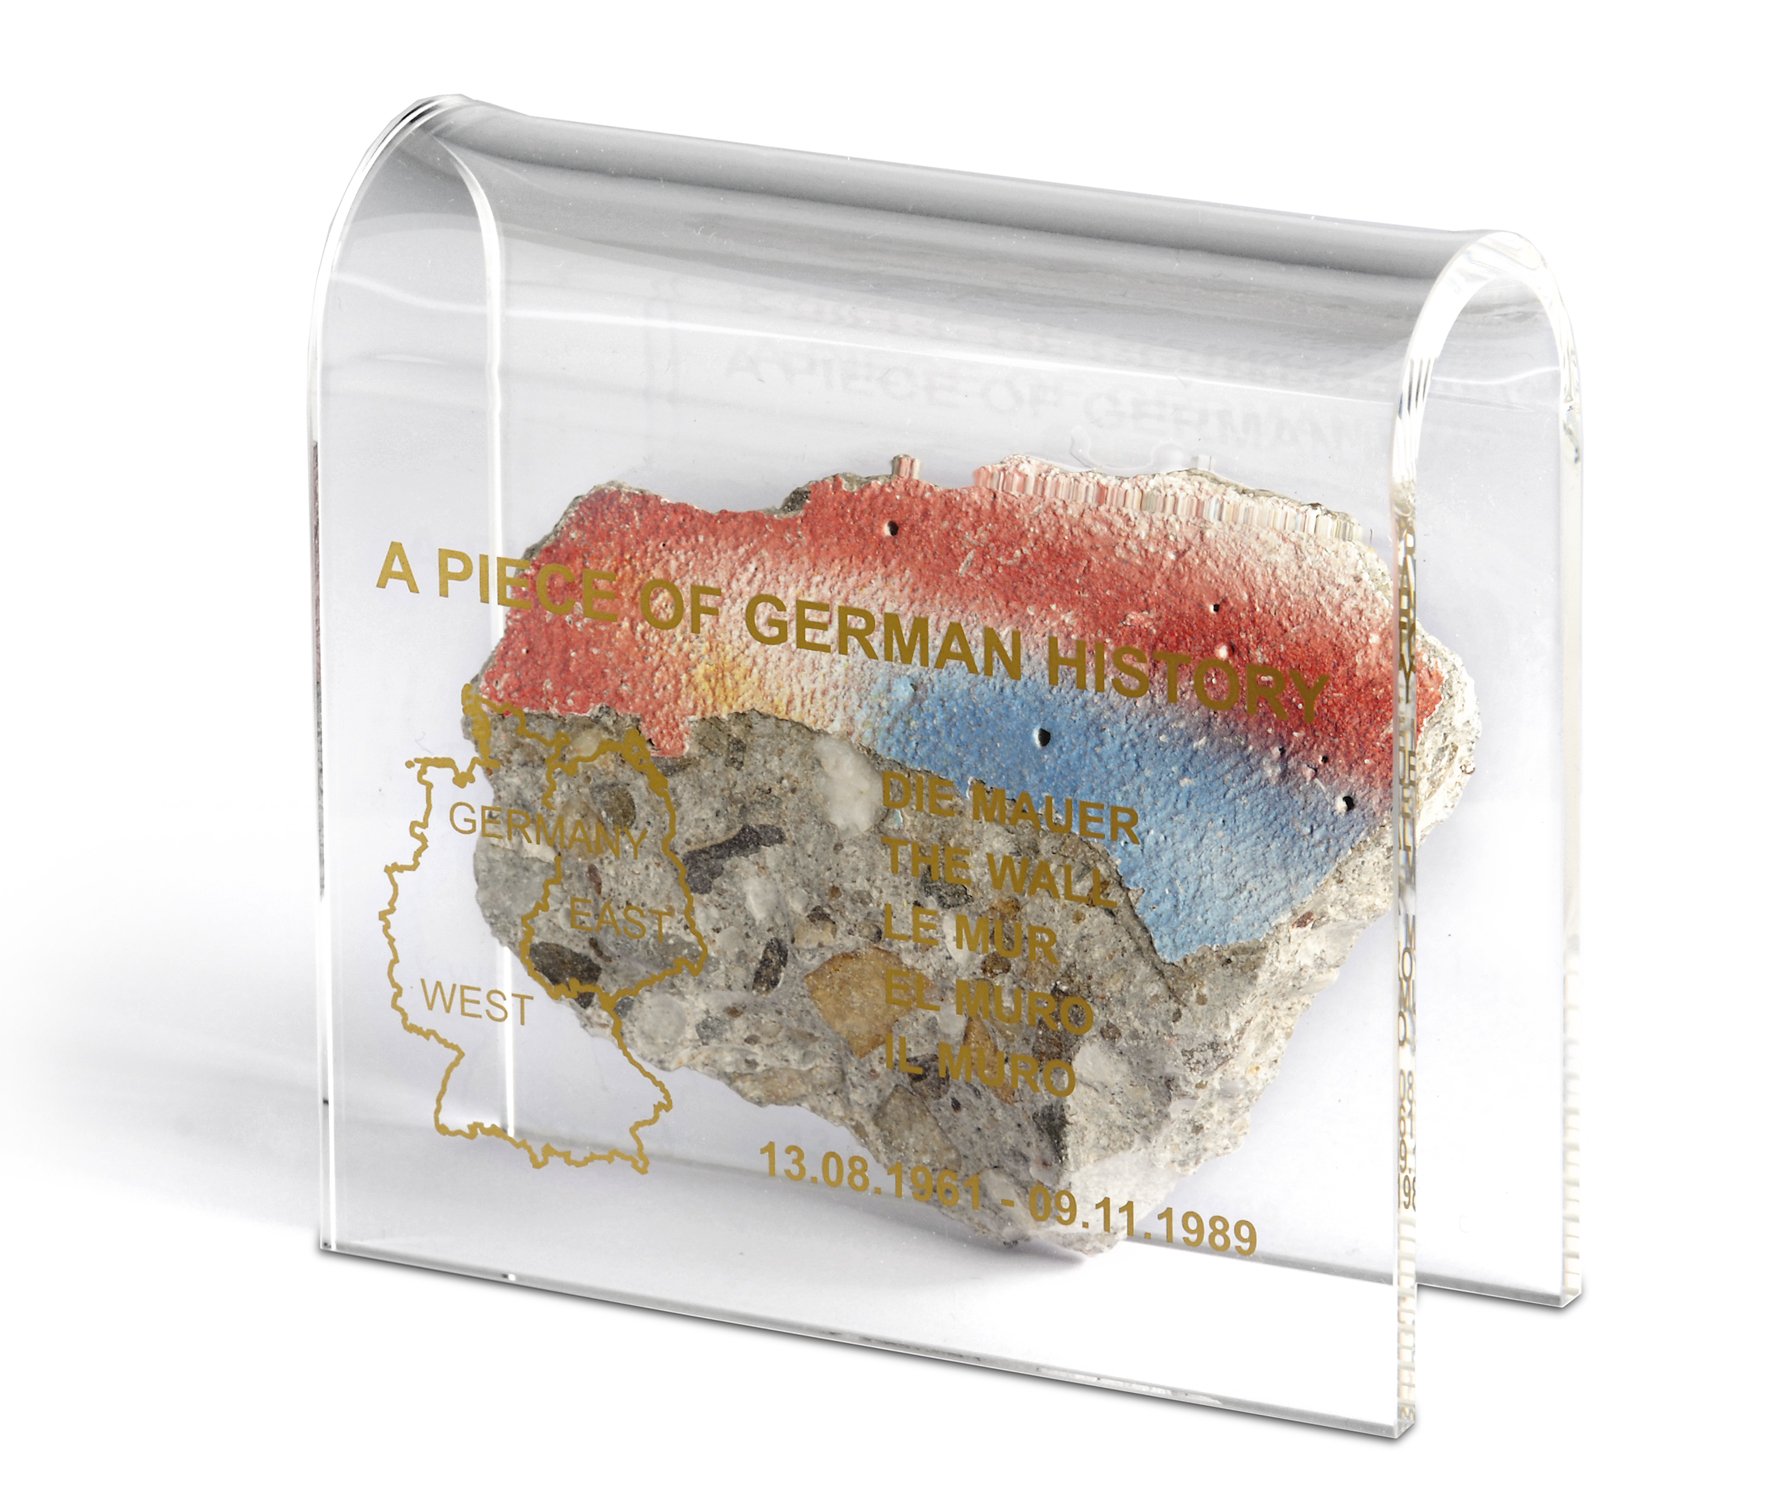 Mauer-Acrylbogen groß “A Piece of German History”  